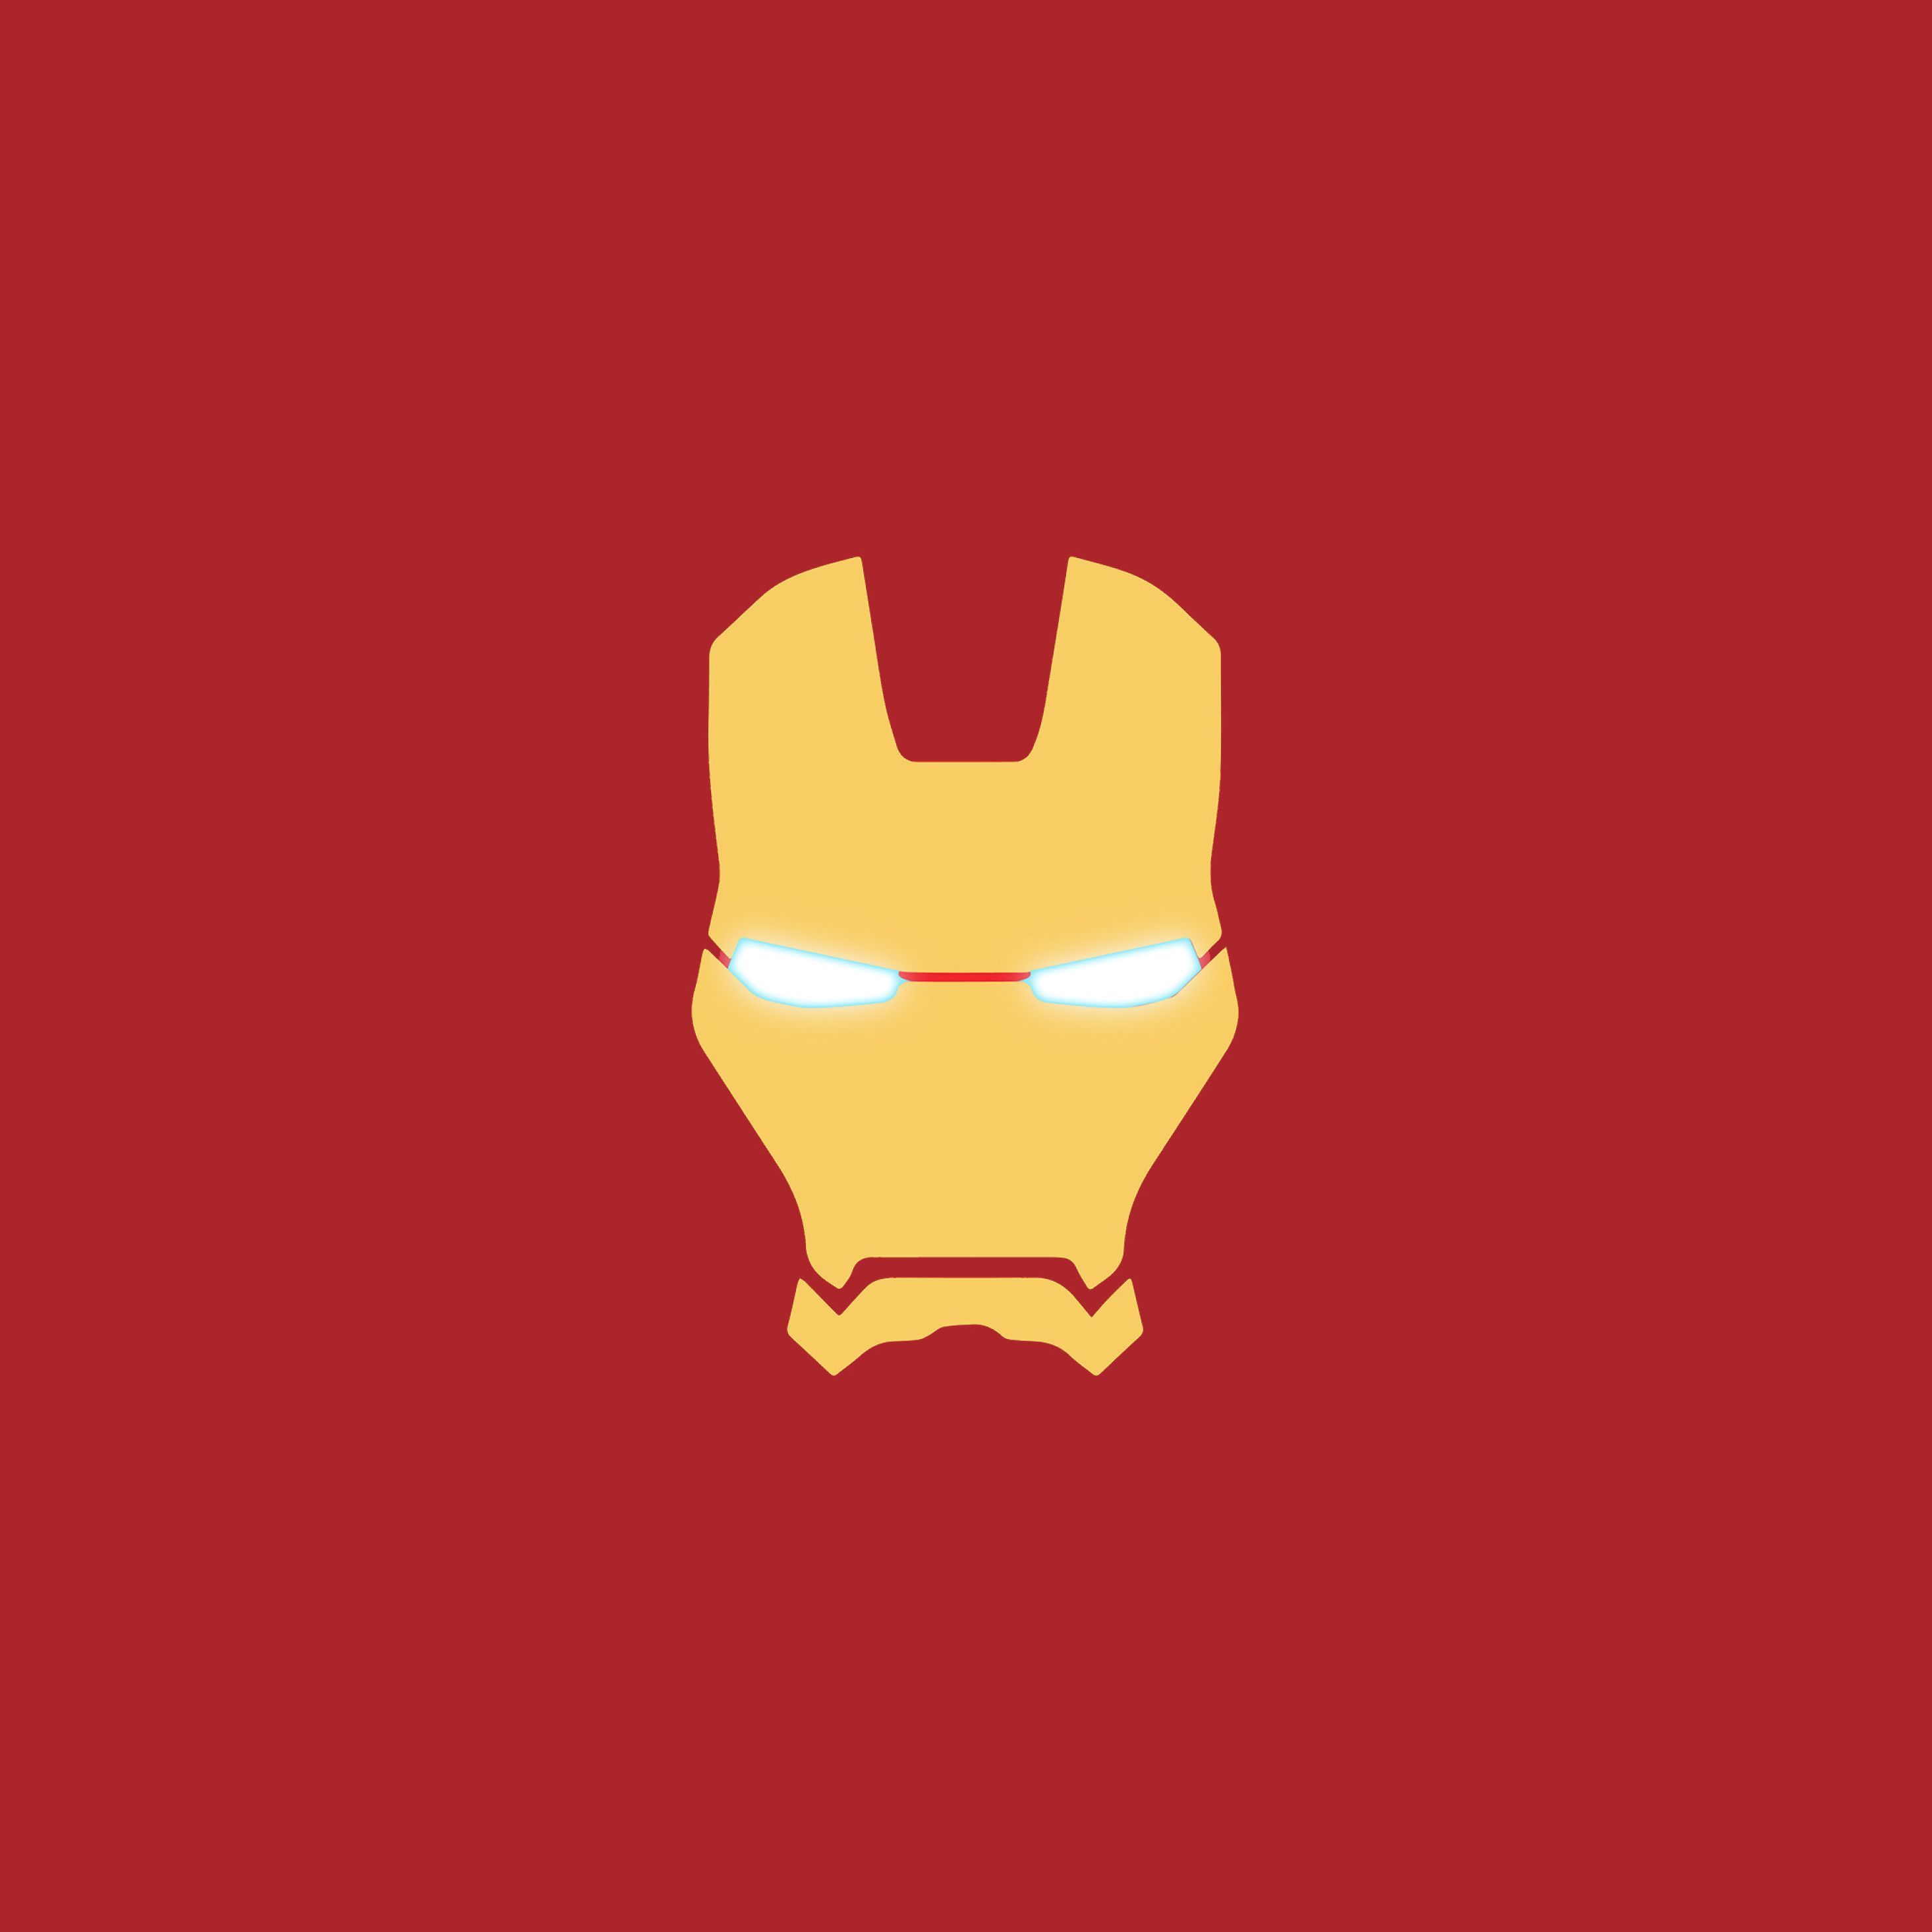 Iron Man Mask Wallpapers - Wallpaper Cave